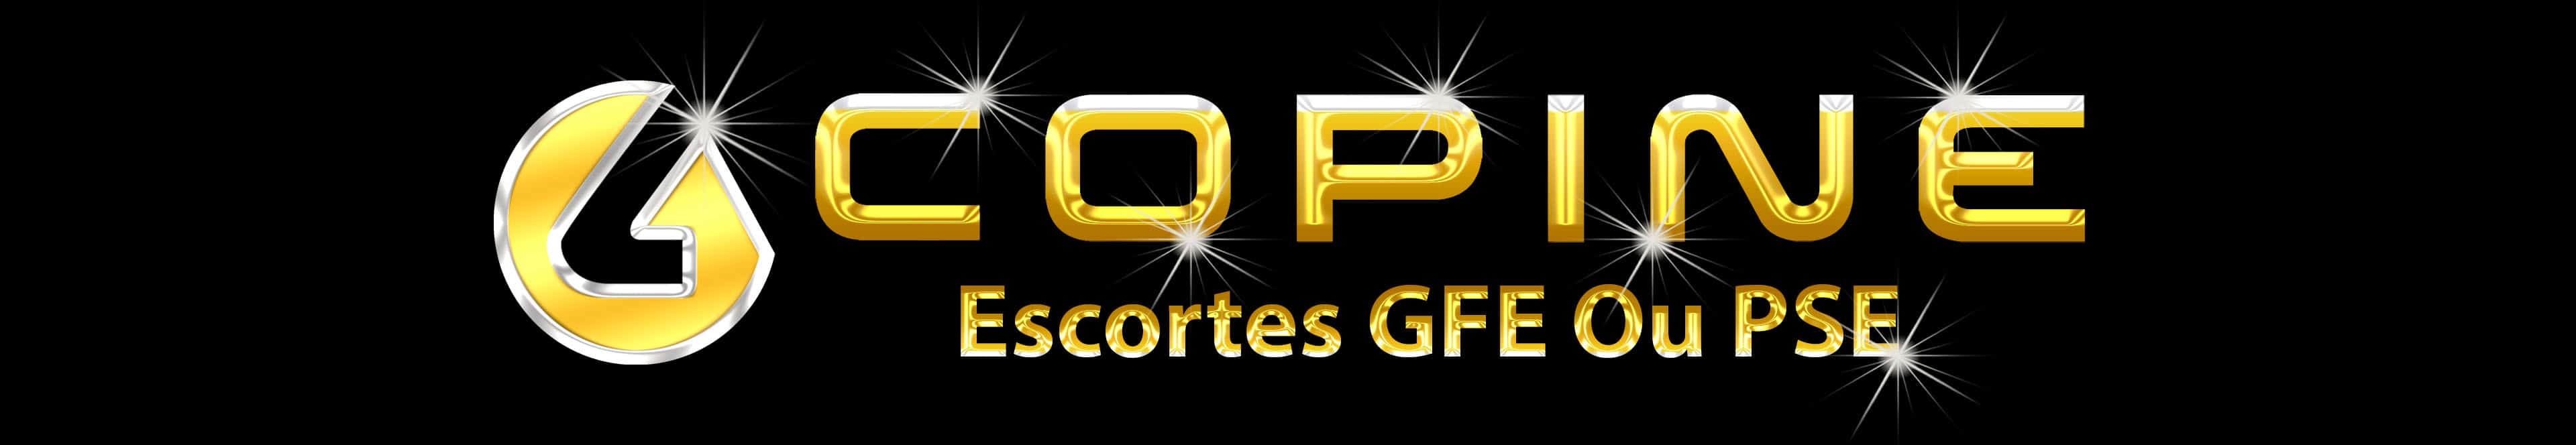 Logo-Division-Absolu-Copine-Escortes-GFE-PSE-Montréal-FR-4K